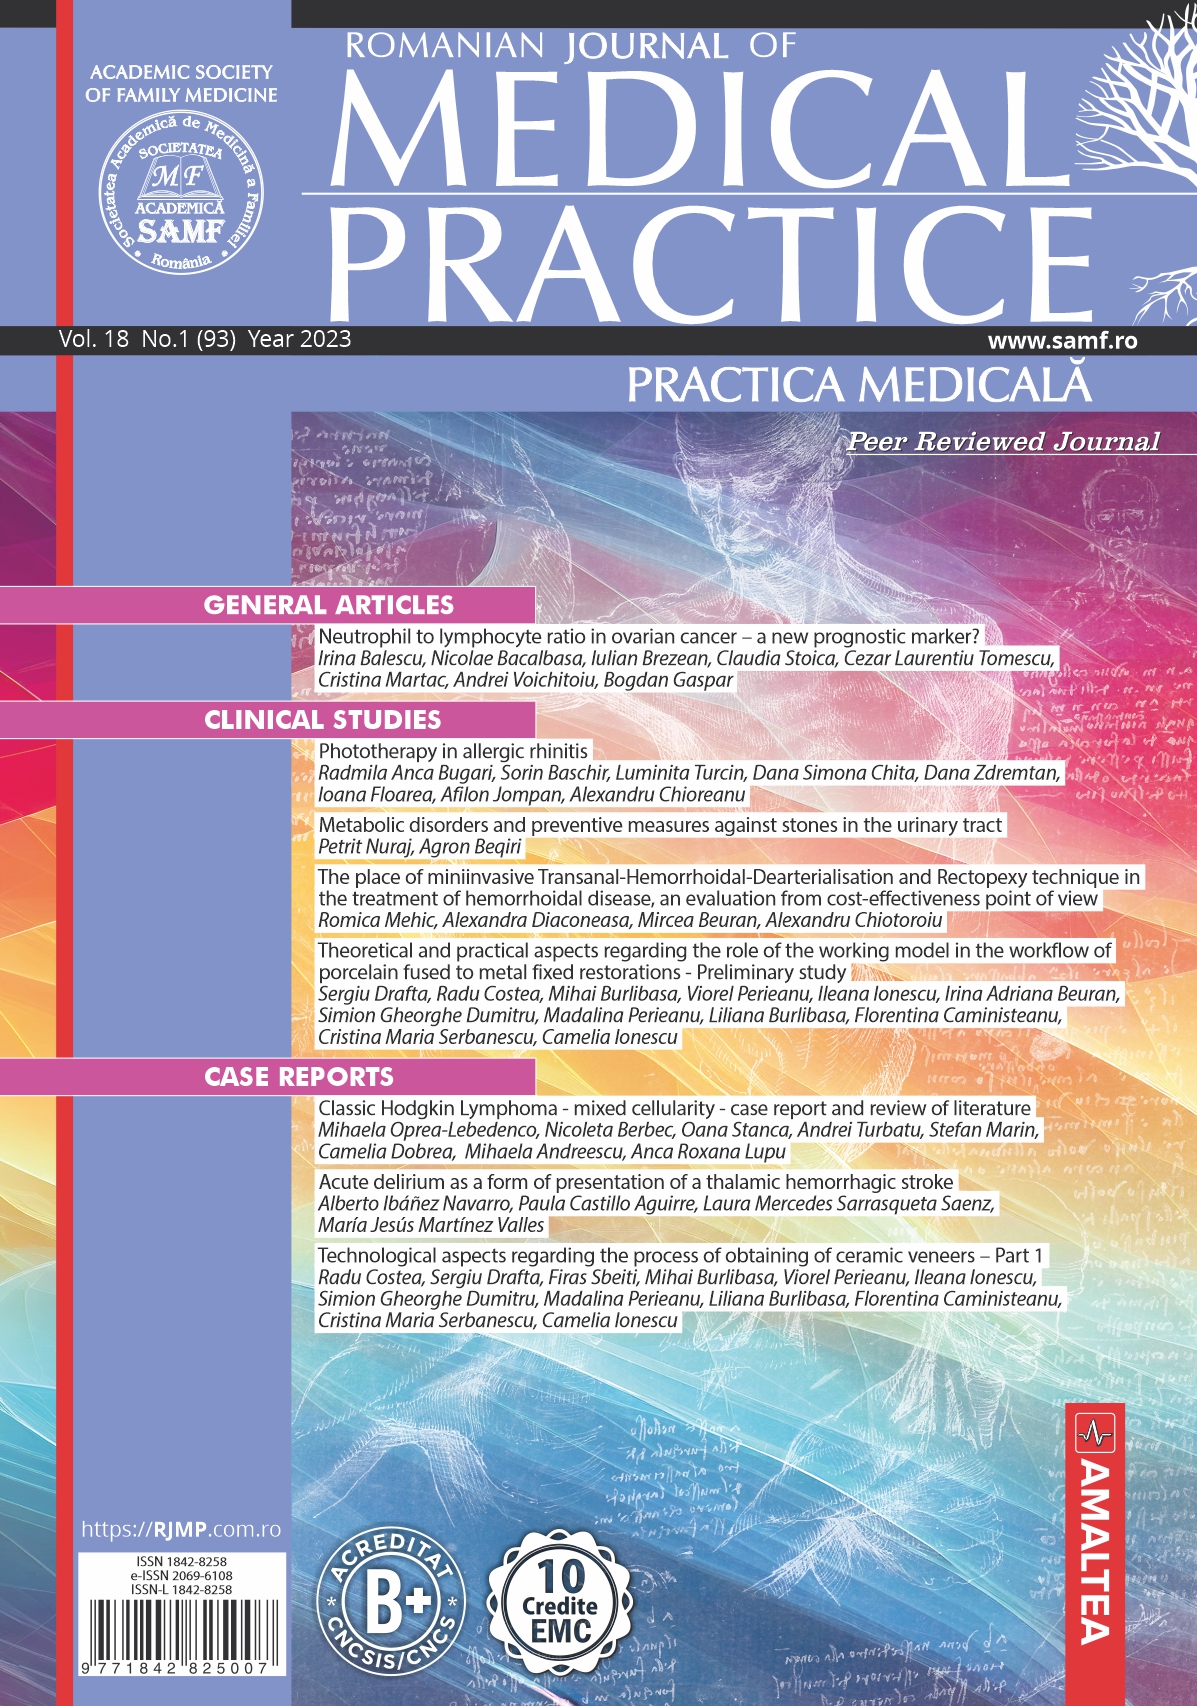 Romanian Journal of Medical Practice | Practica Medicala, Vol. 18, No. 1 (93), 2023